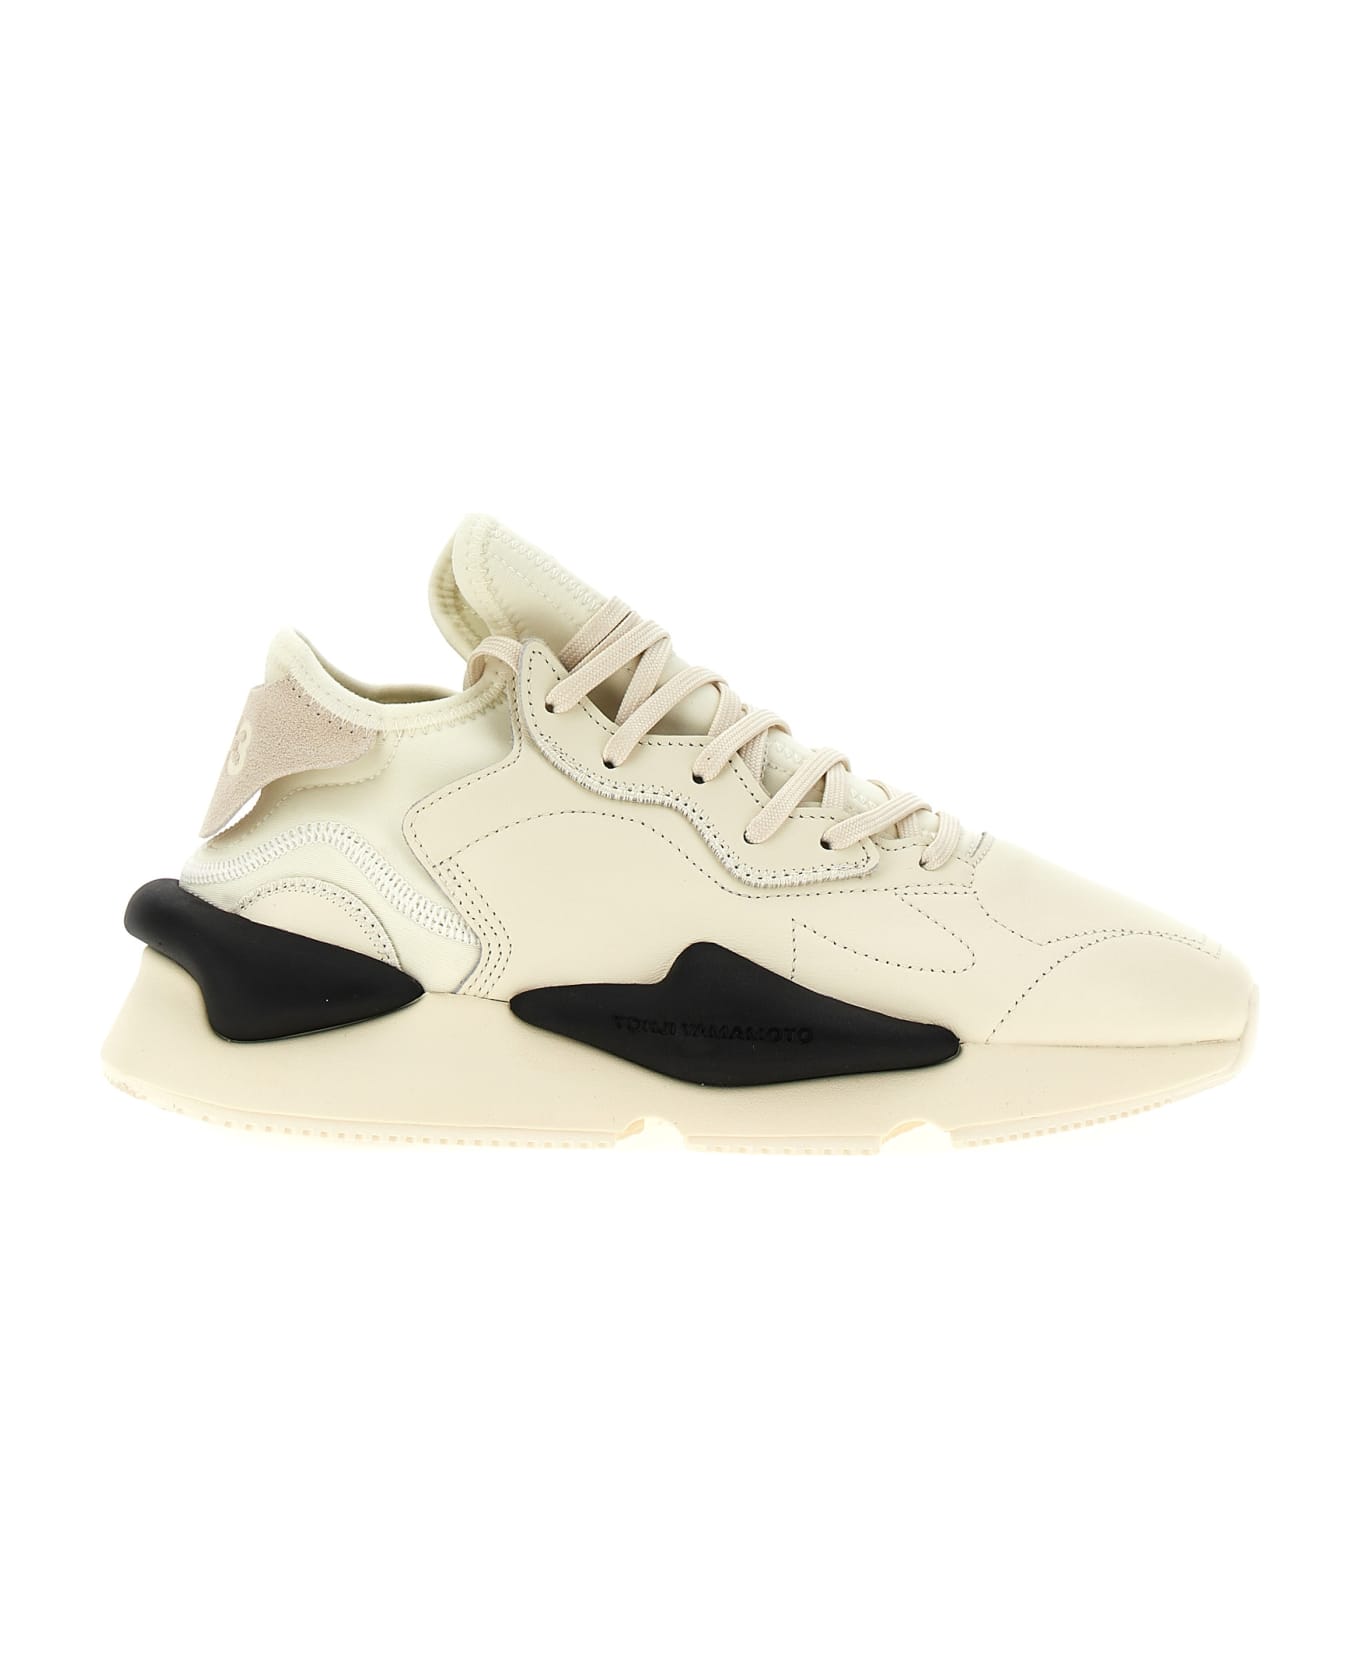 Y-3 'kaiwa' Sneakers - White スニーカー